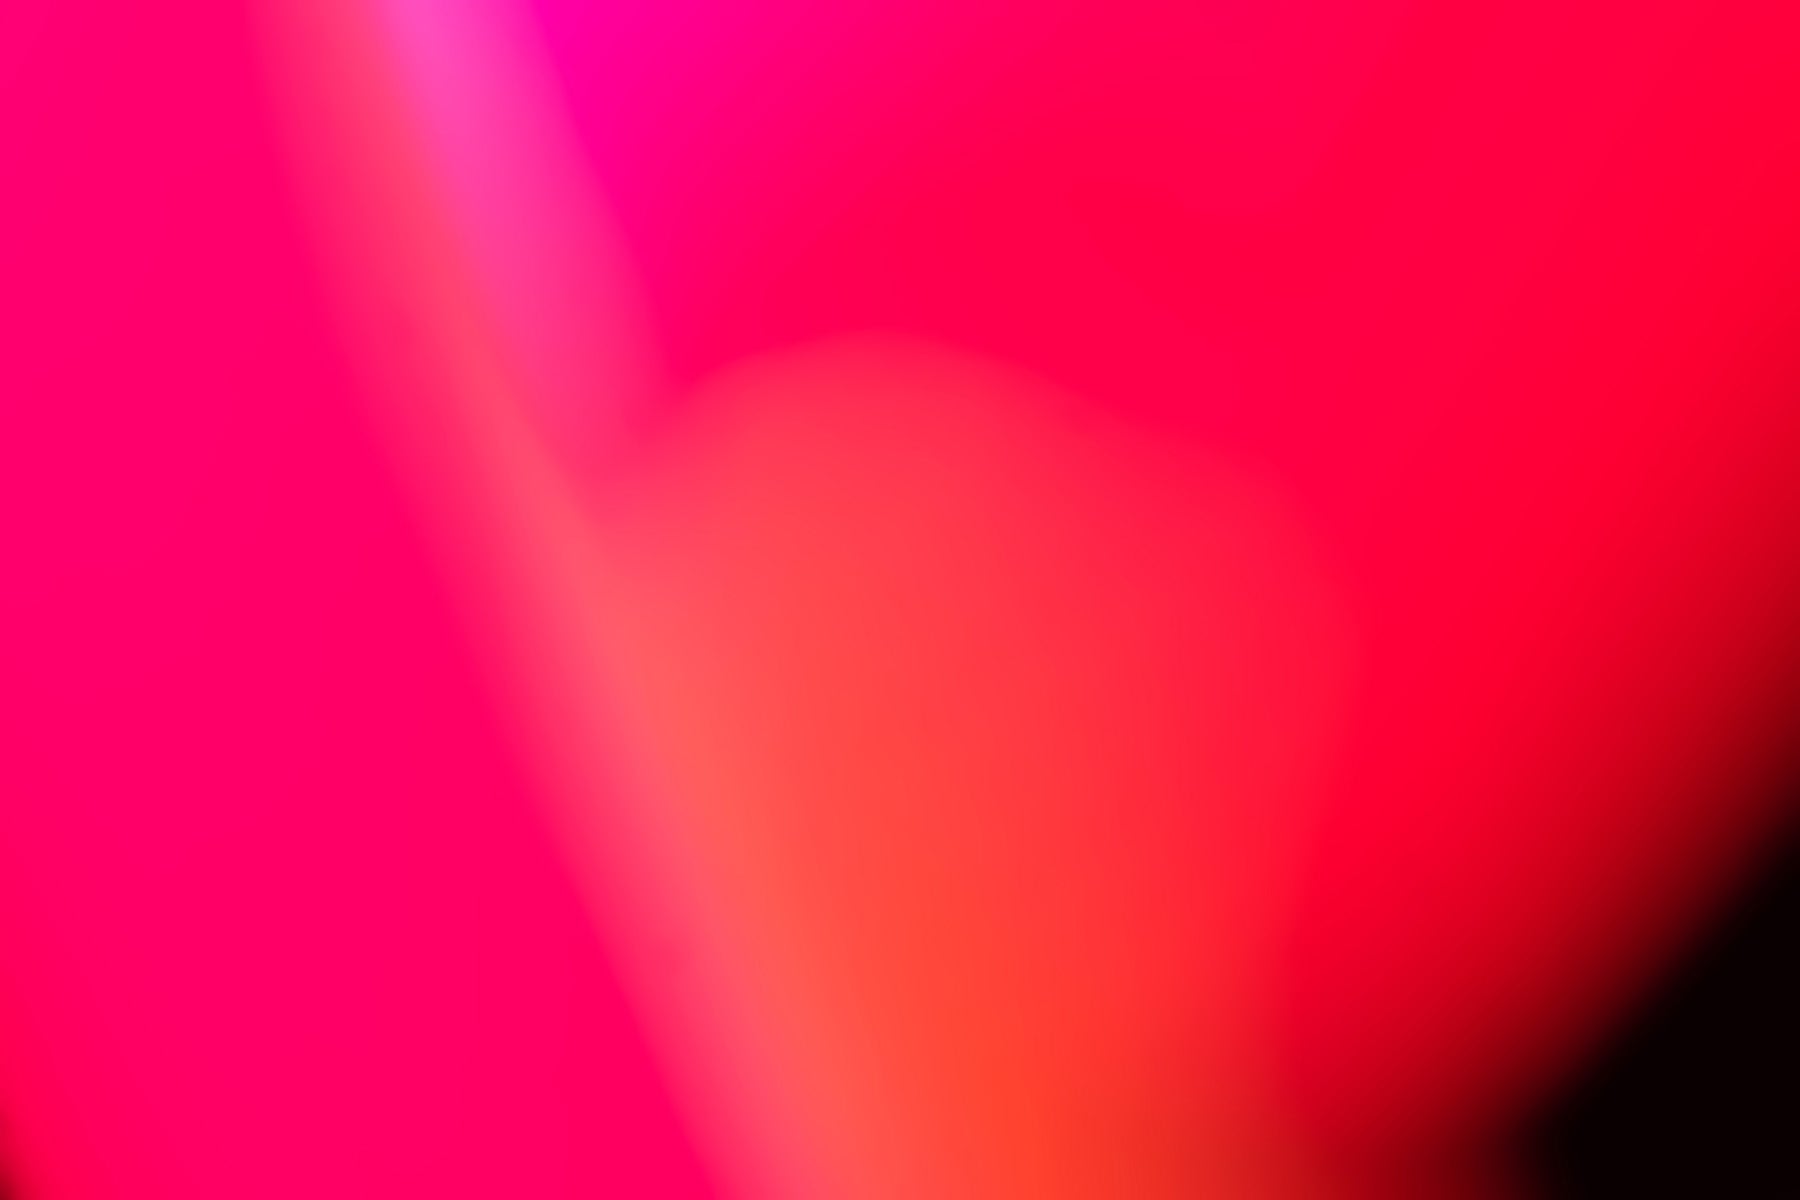 Pinkish Red Background Image